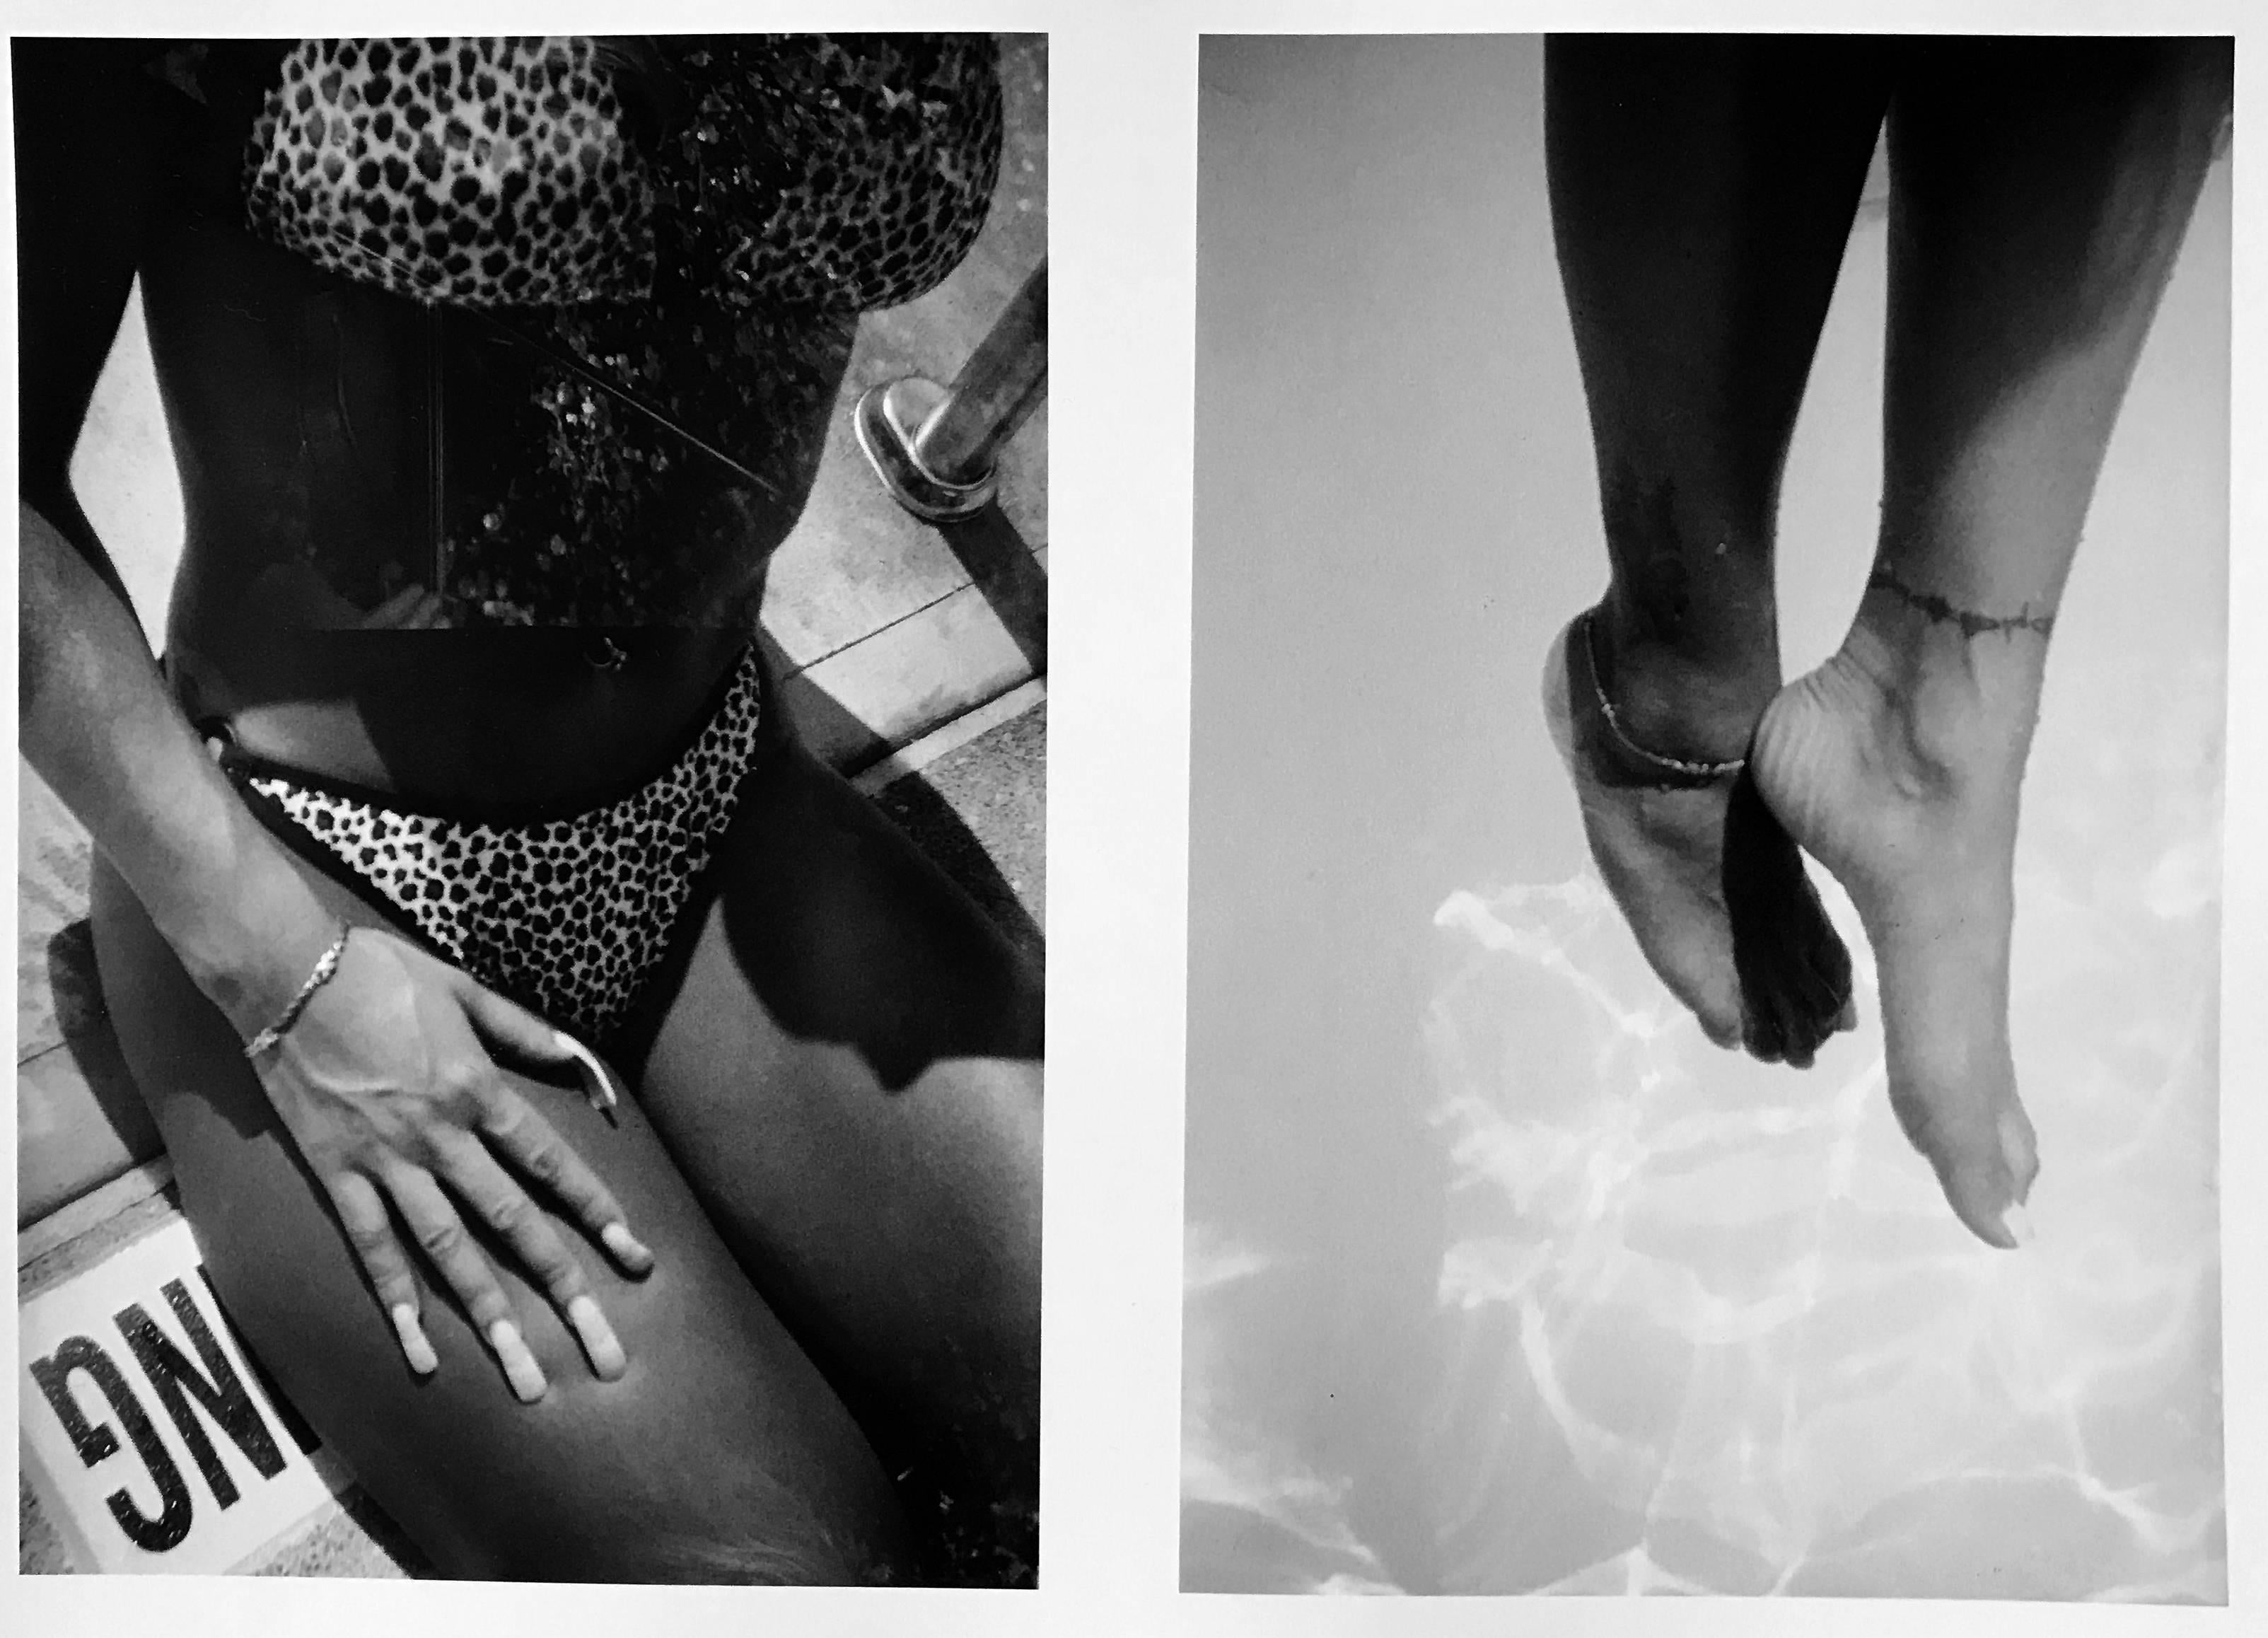 Leopard Bikini, New York 1990s, Black and White Creative PortraIt Photography